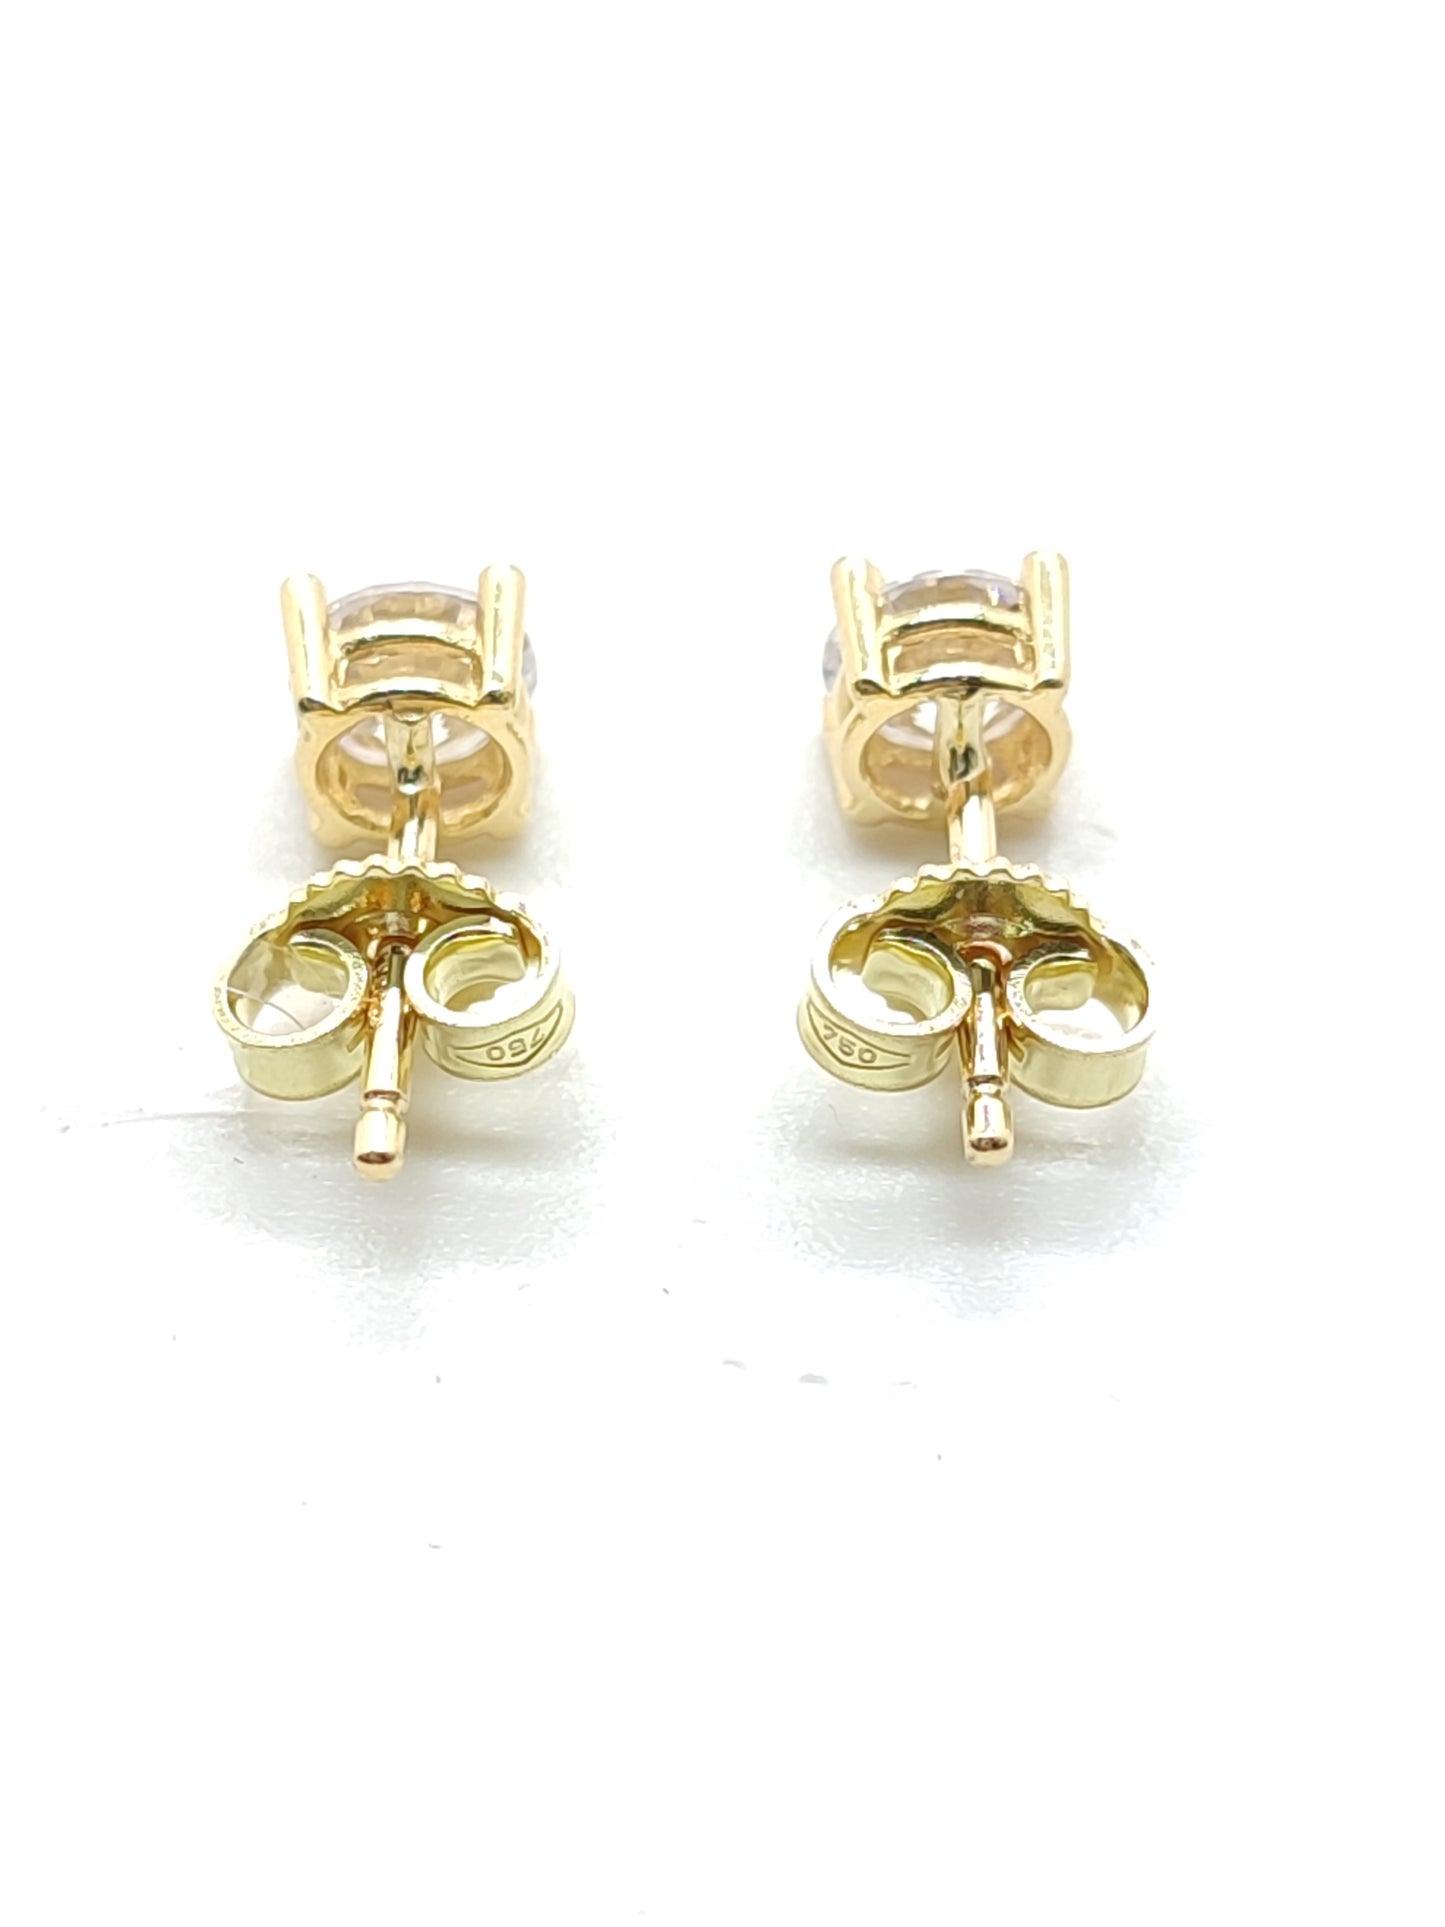 Lobe earrings in wire gold and 5 mm zircons